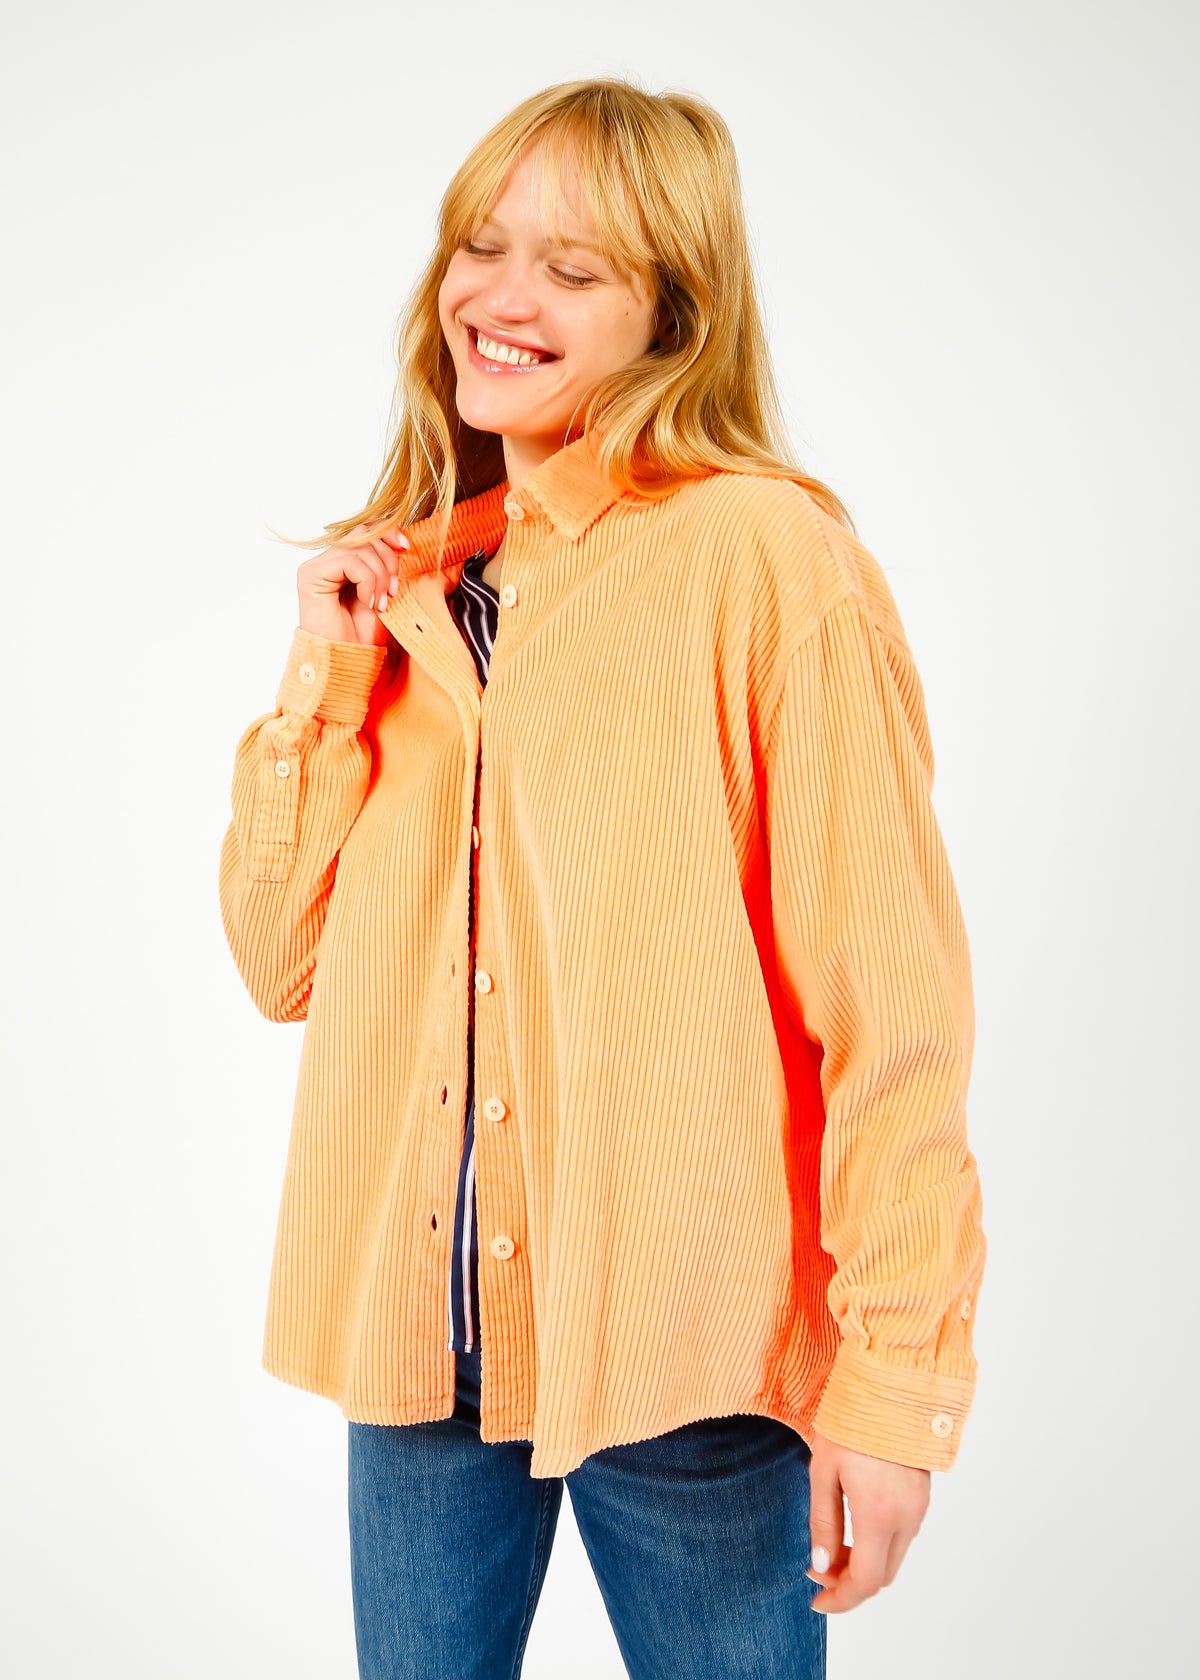 AV Padow Shirt in Orange Fluro